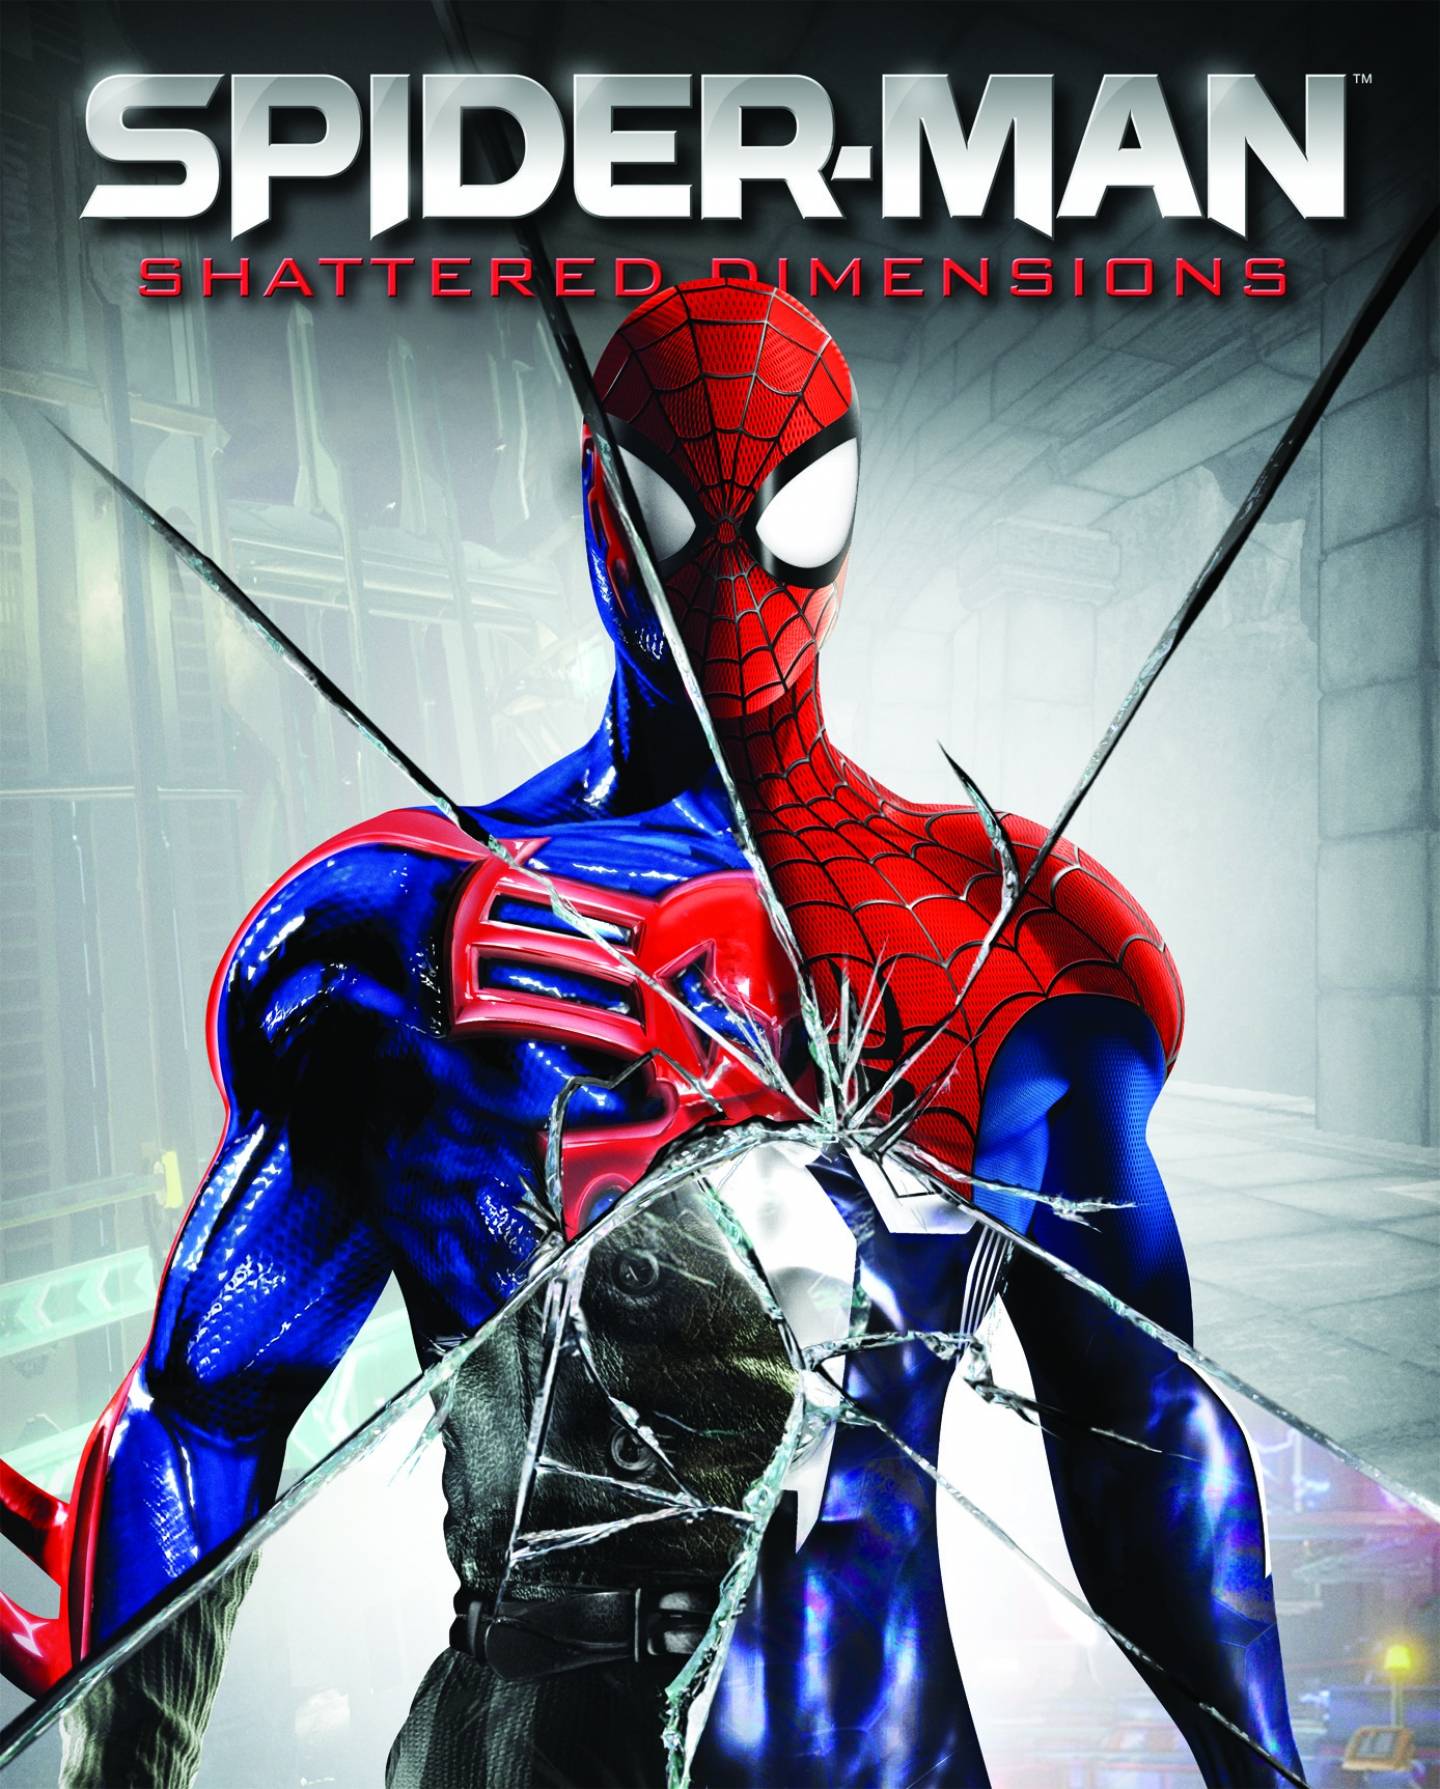 image For > Spider Man Shattered Dimensions Wallpaper